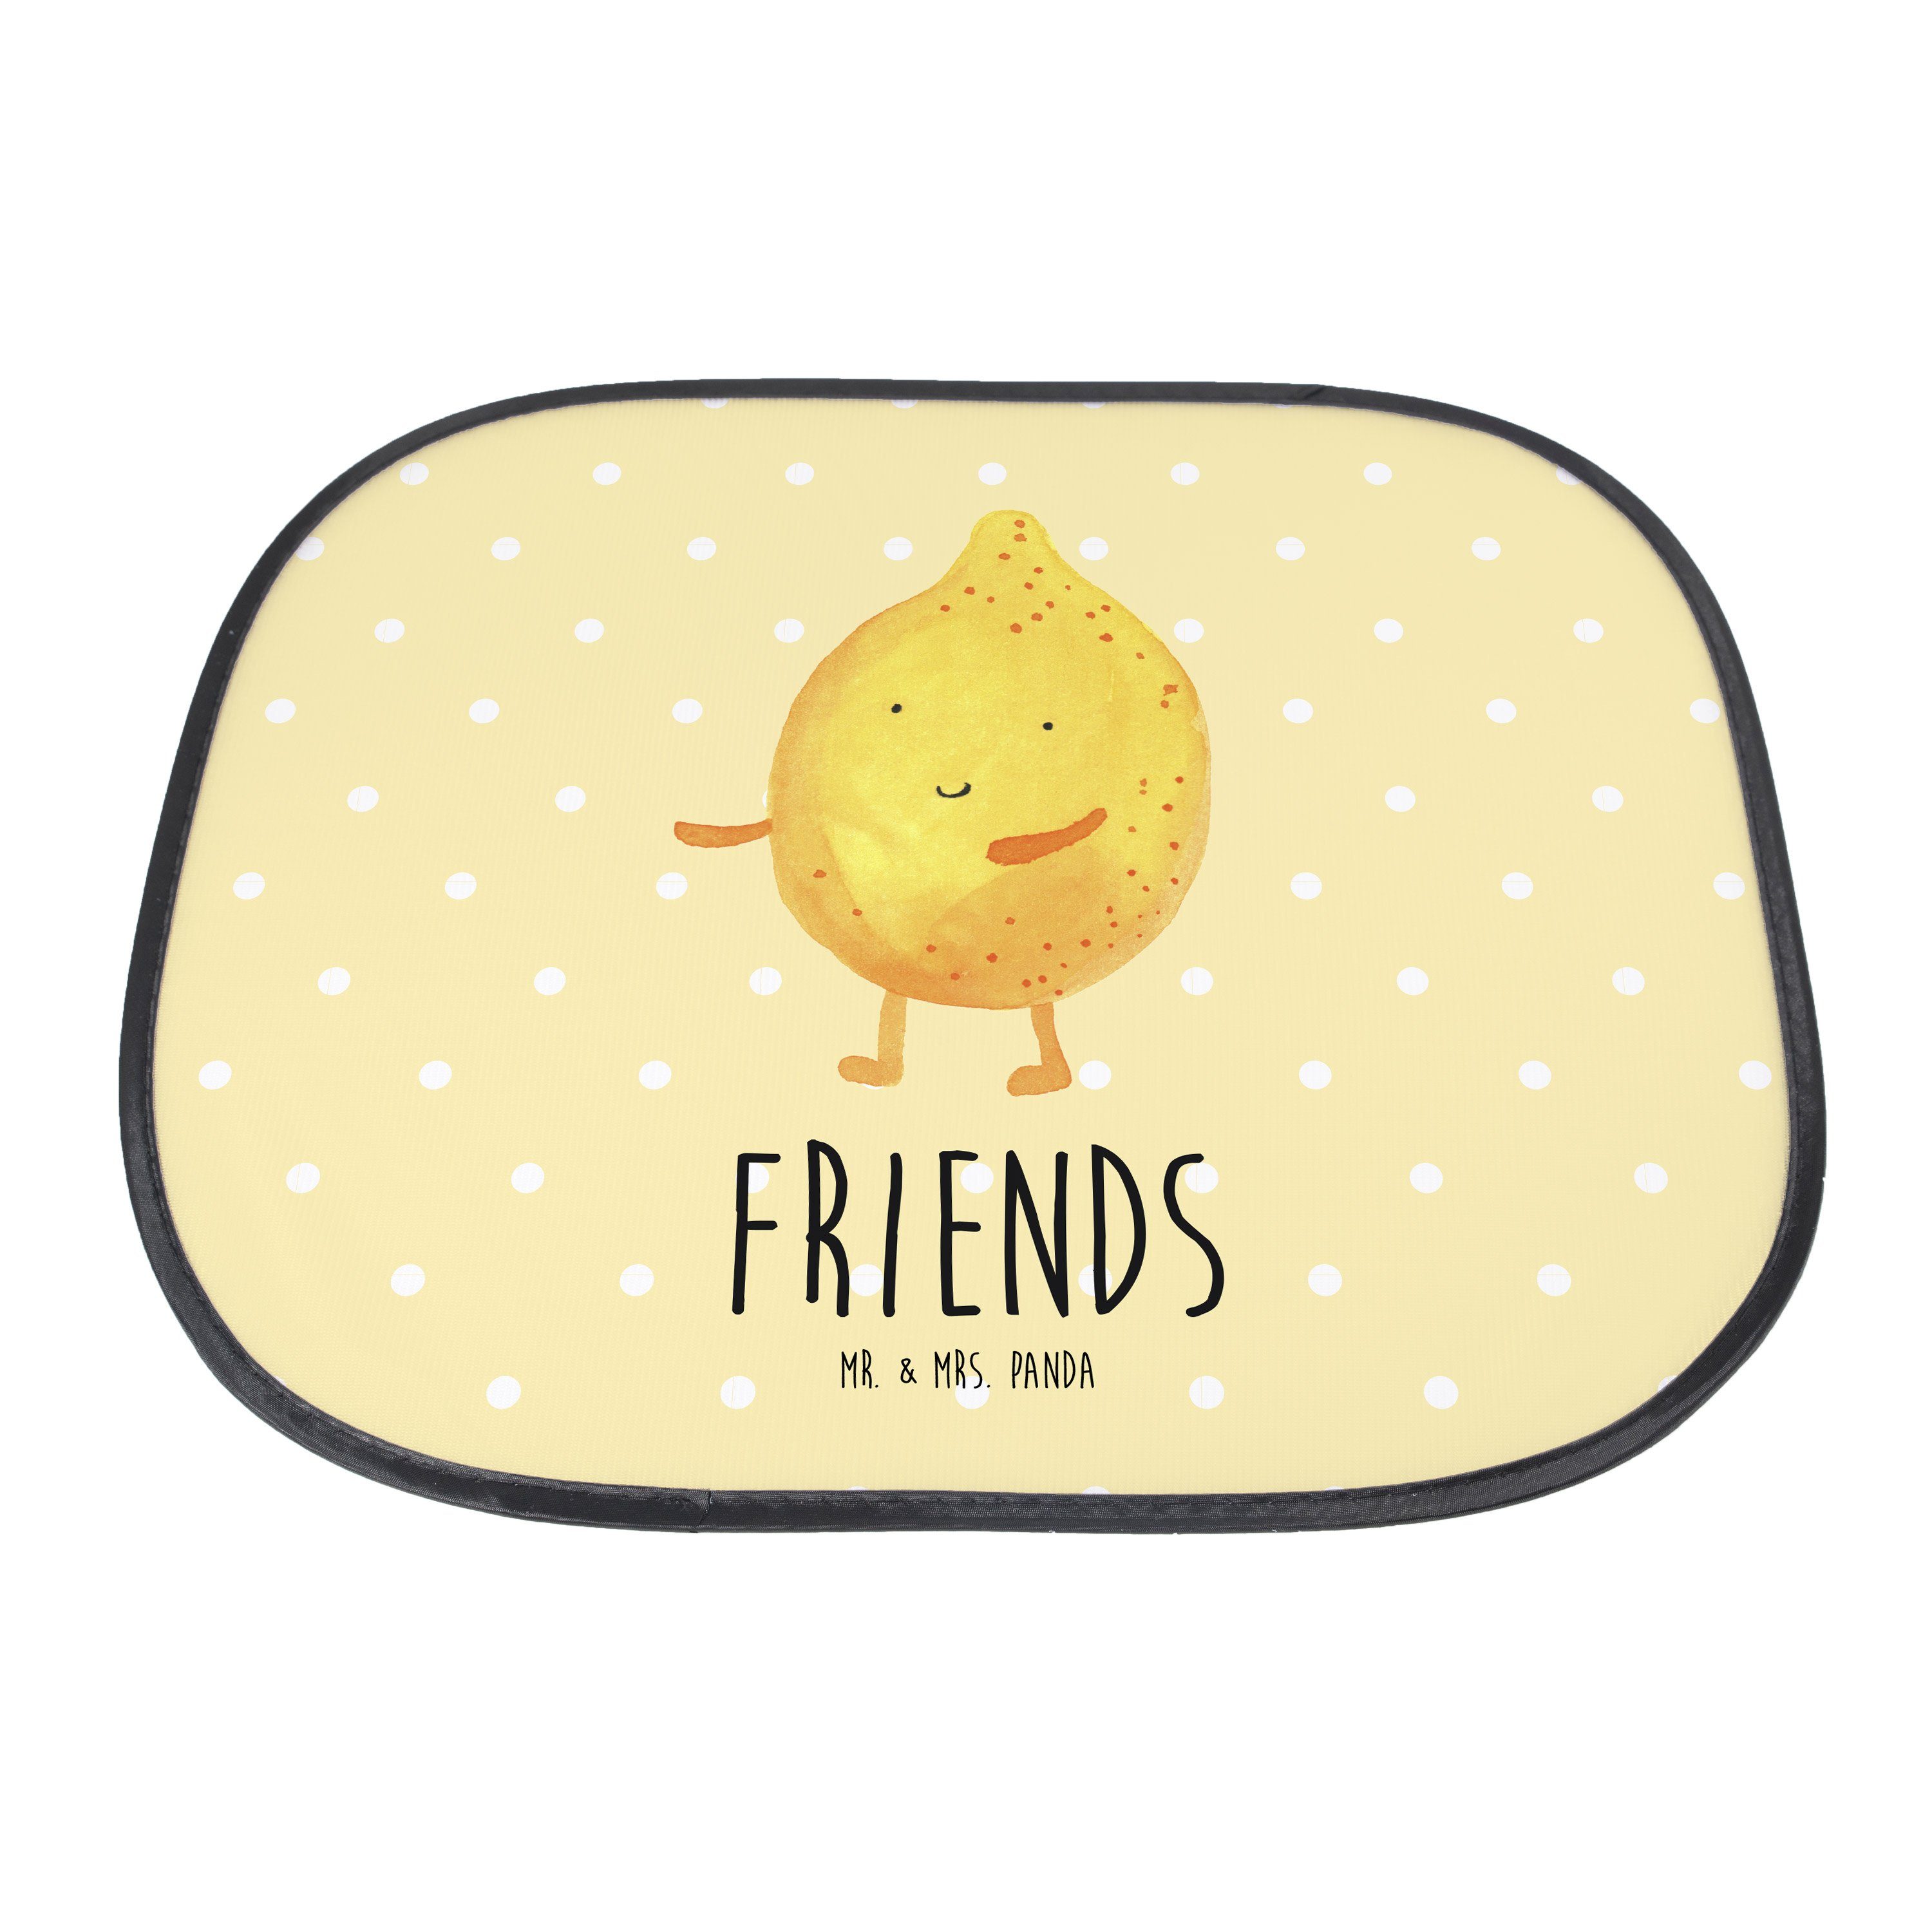 Sonnenschutz BestFriends-Lemon - Mr. Pastell Seidenmatt - Kind, & Sonne, Sonnenschutz Mrs. Panda, Geschenk, Gelb